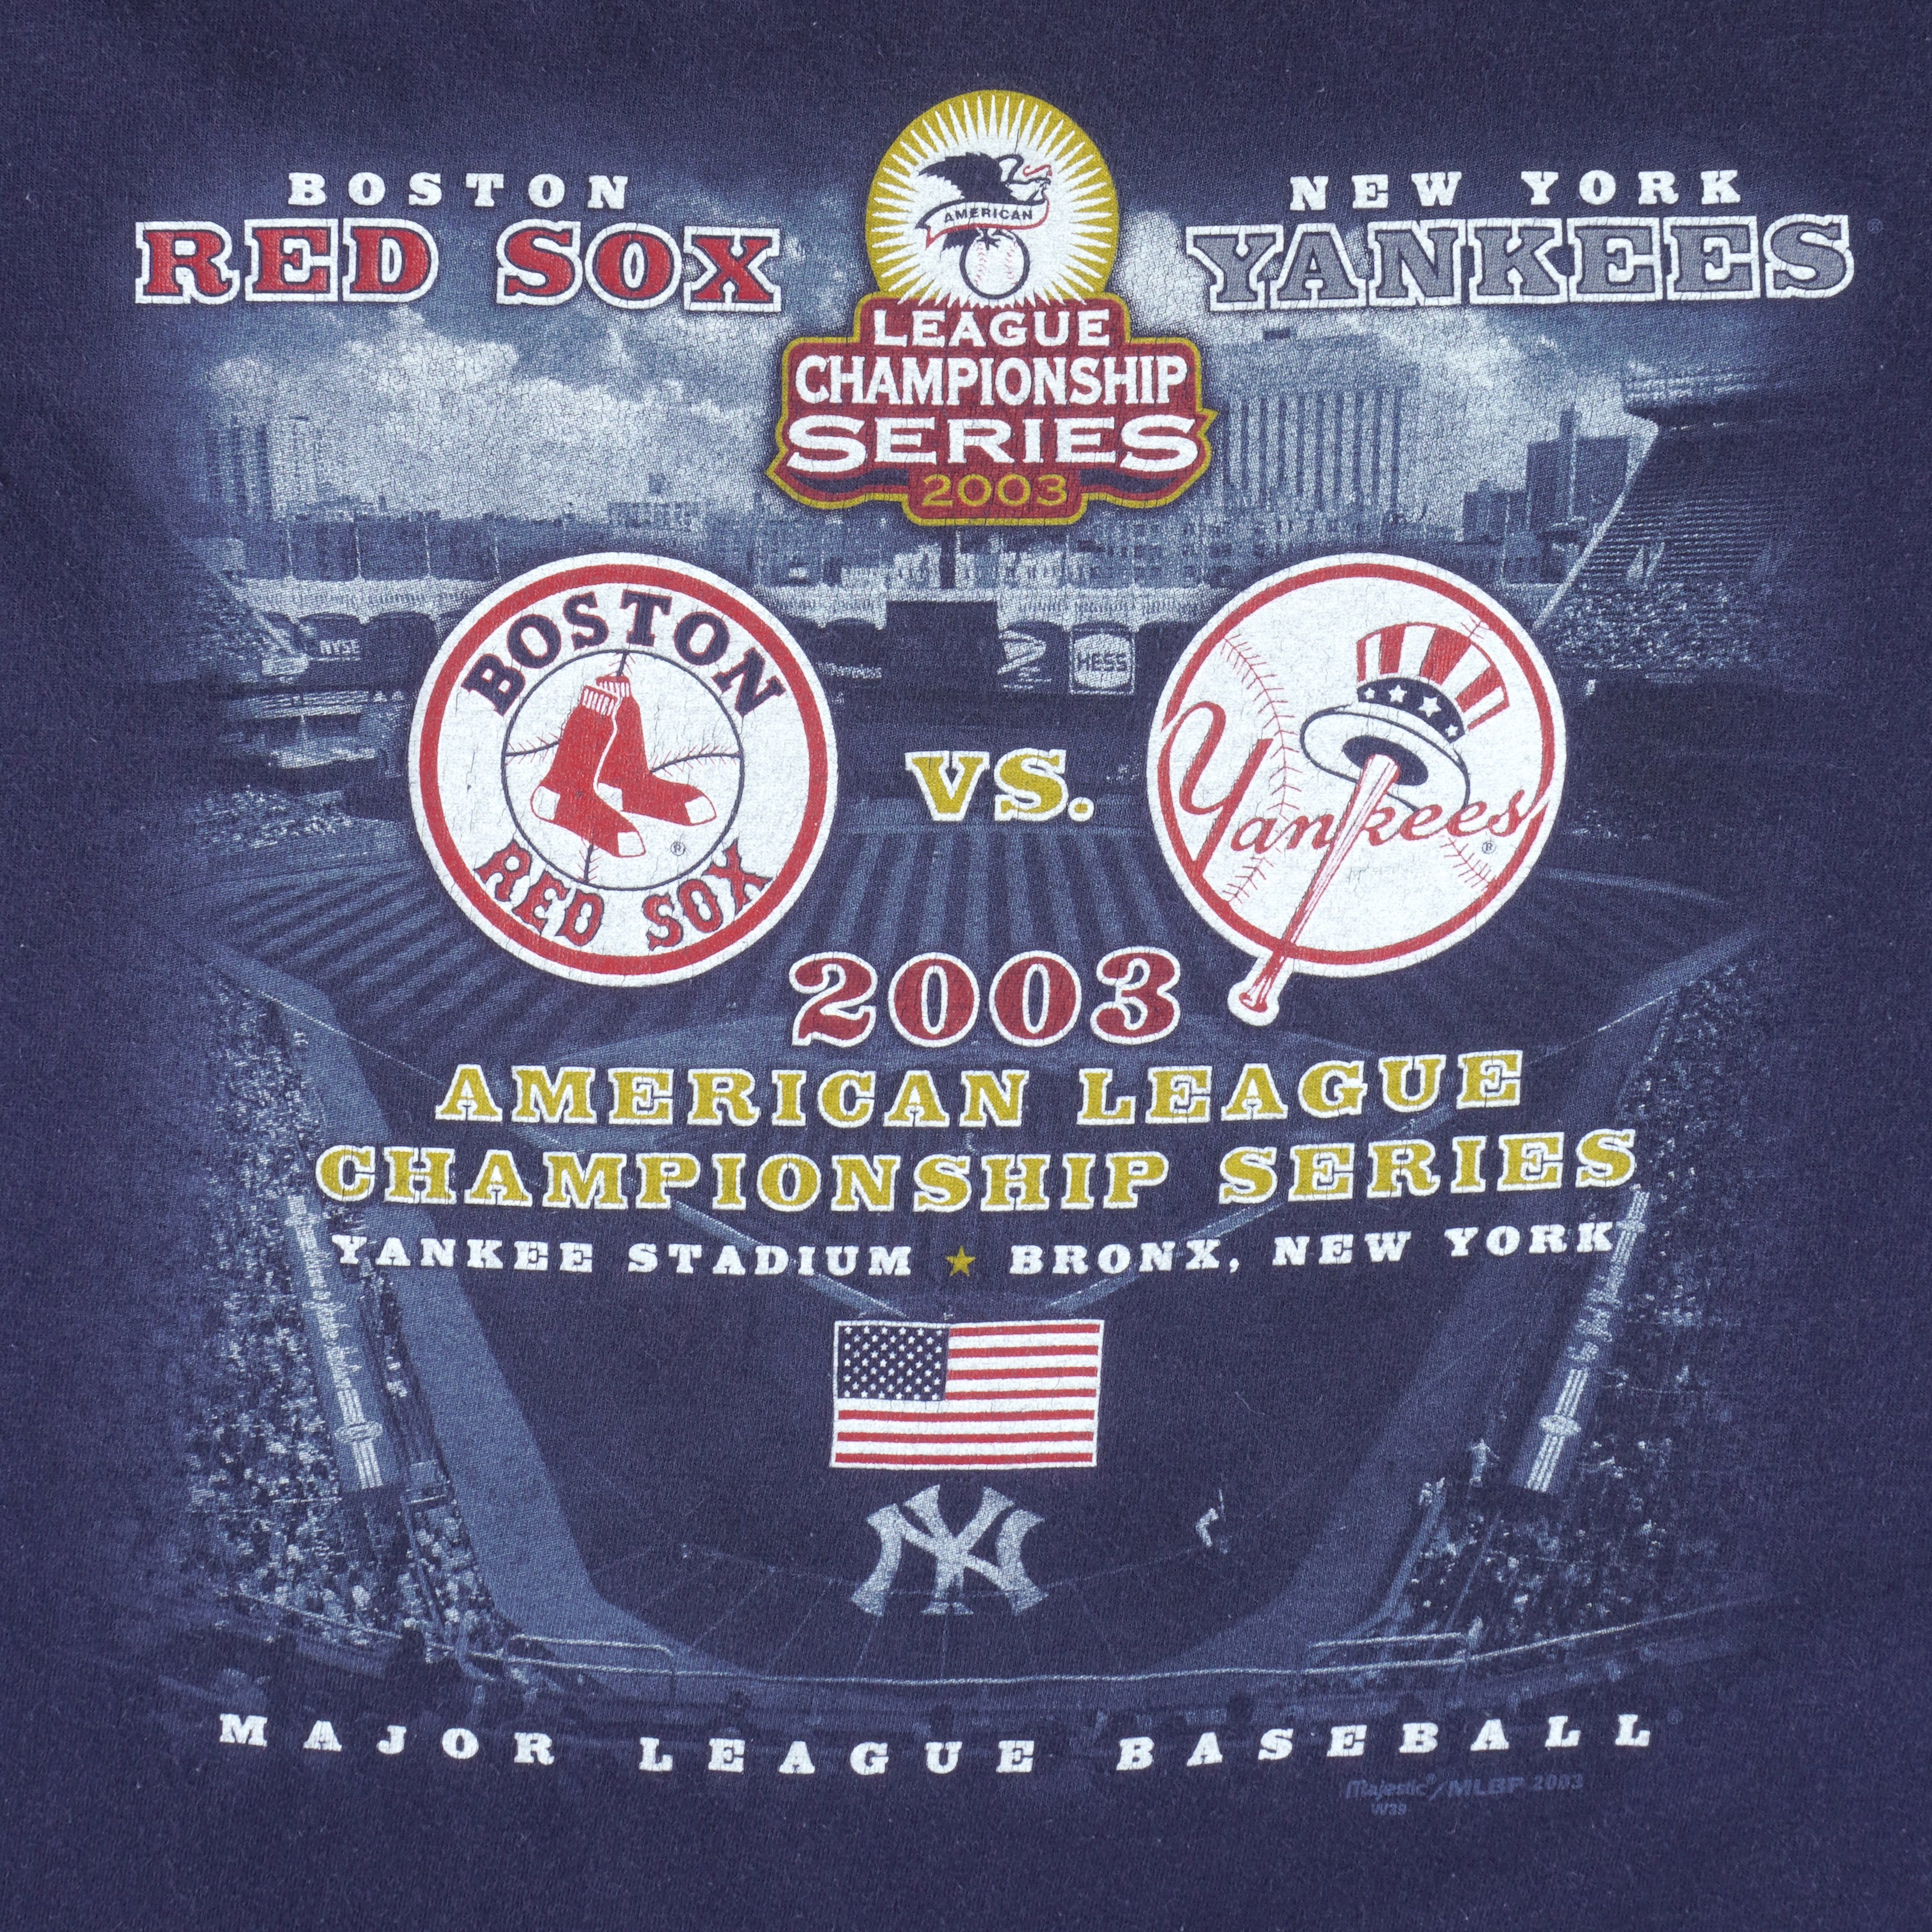 MLB Vintage Boston Red Sox baseball Majestic jersey size Large